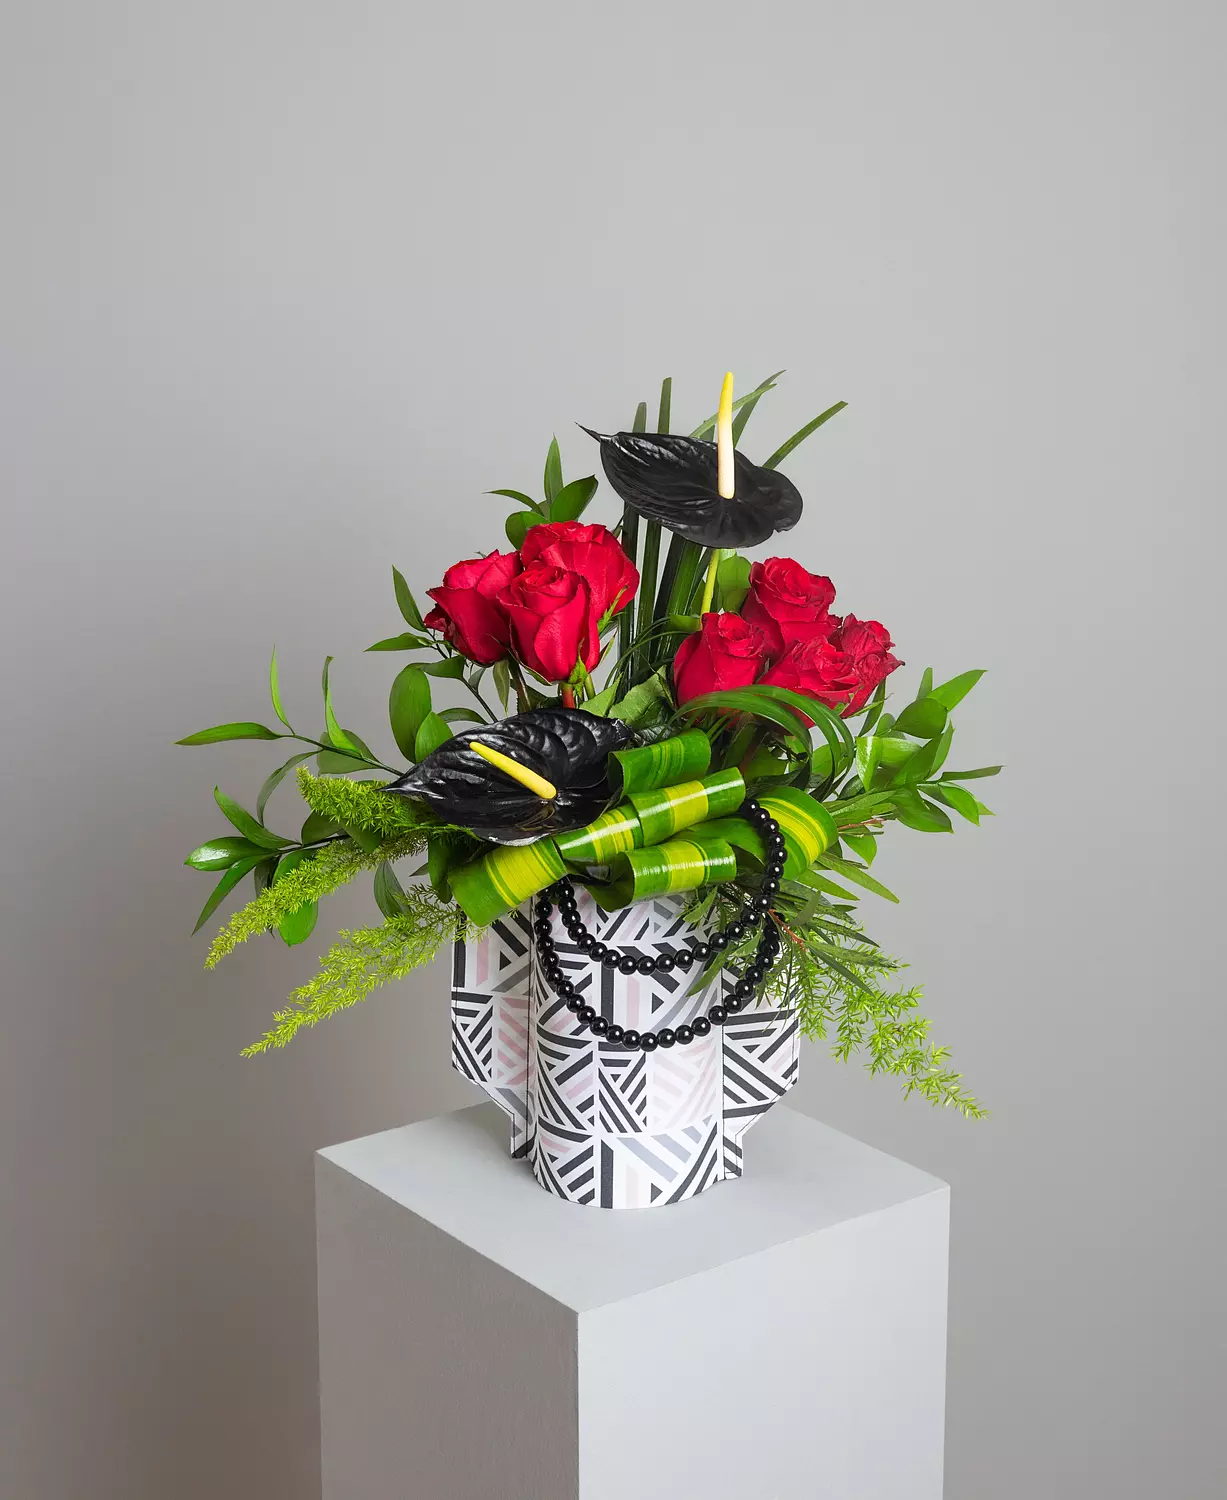 Red and Black Love Flower Vase hover image